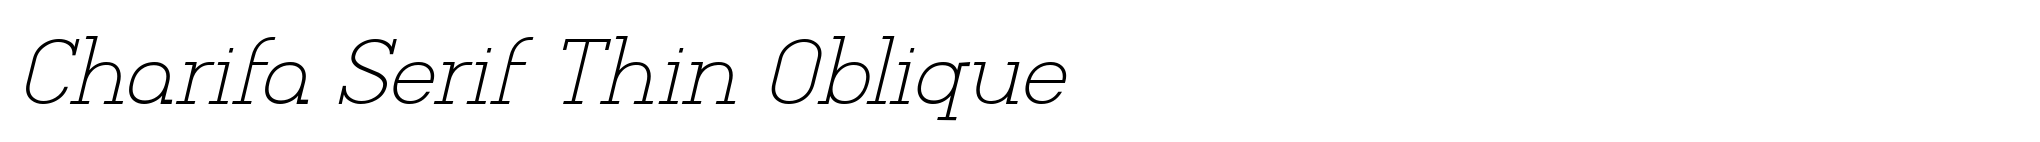 Charifa Serif Thin Oblique image